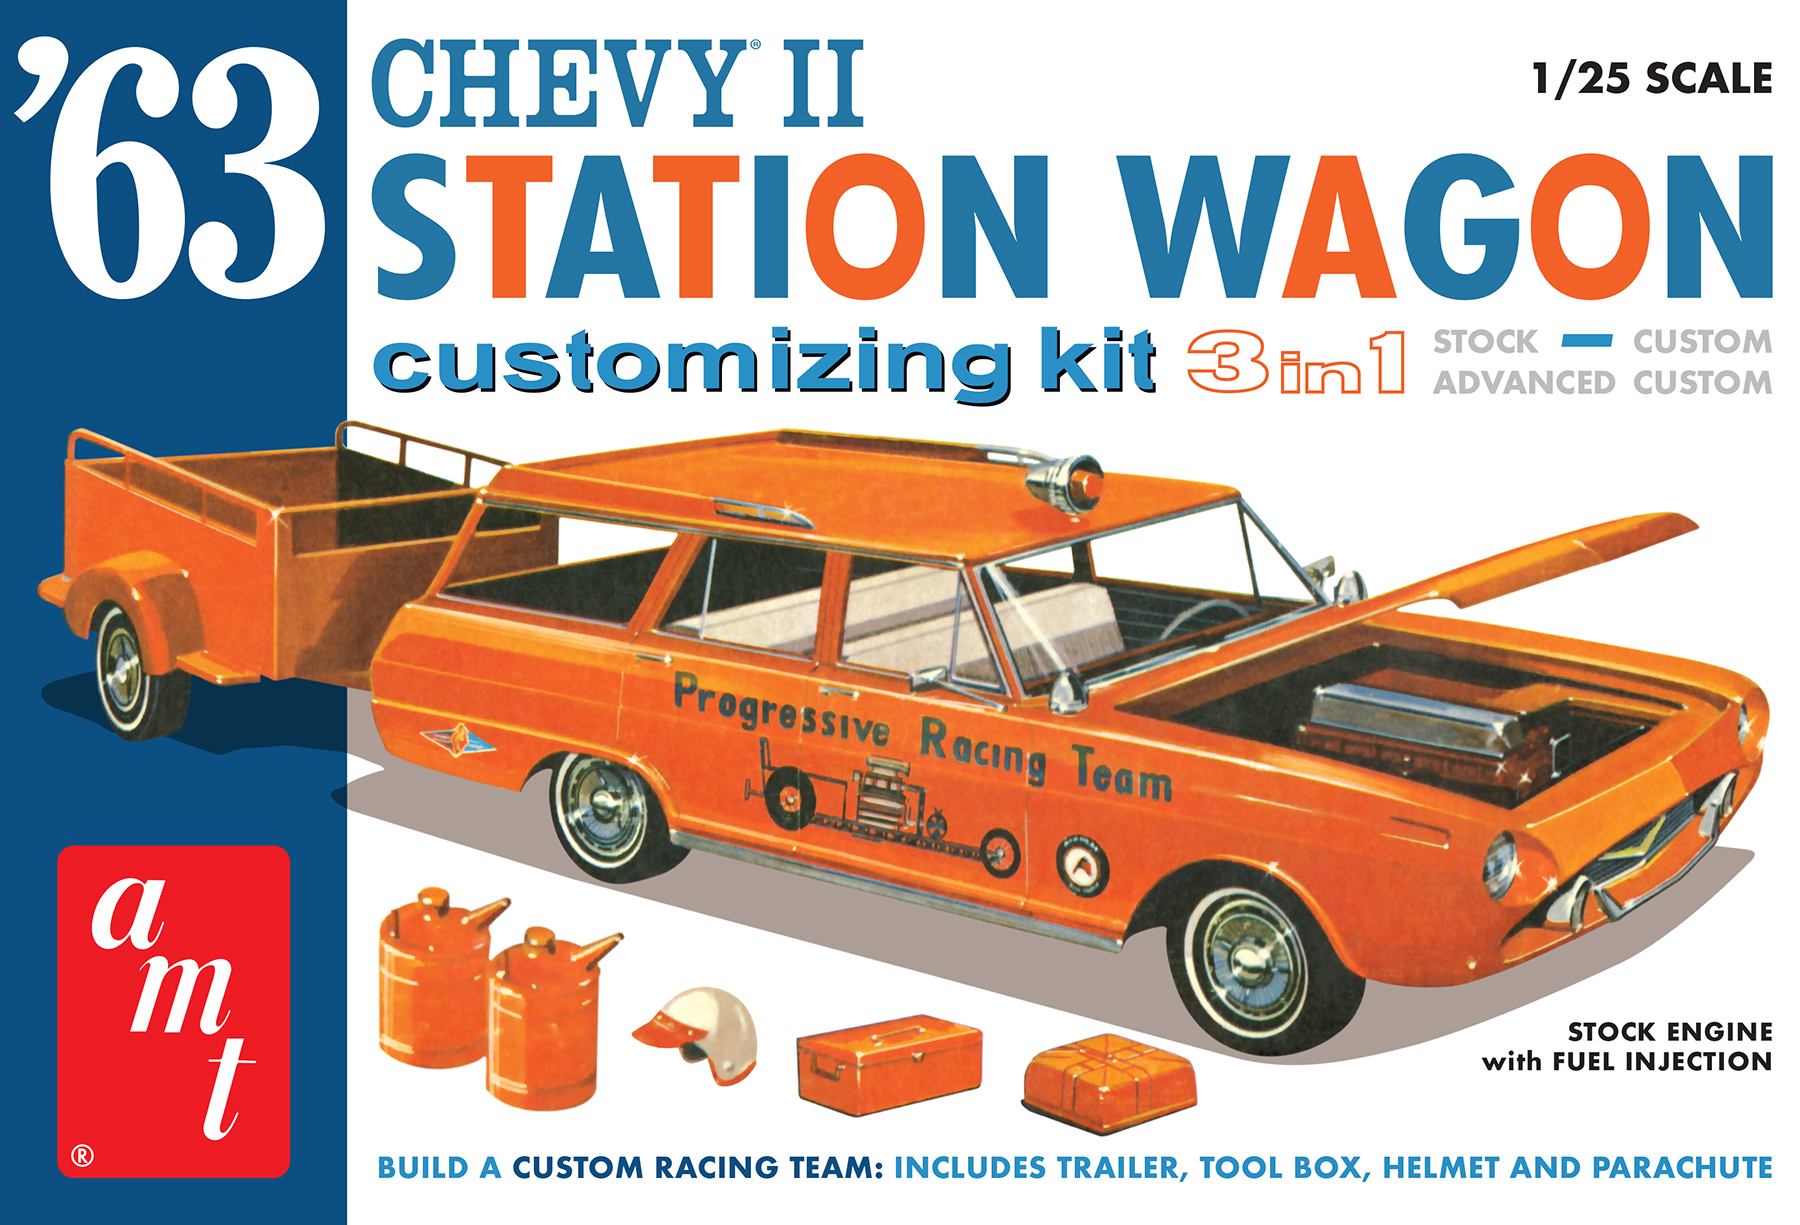 1963 Chevy II Customizing Station Wagon (3 in 1) w/Trailer